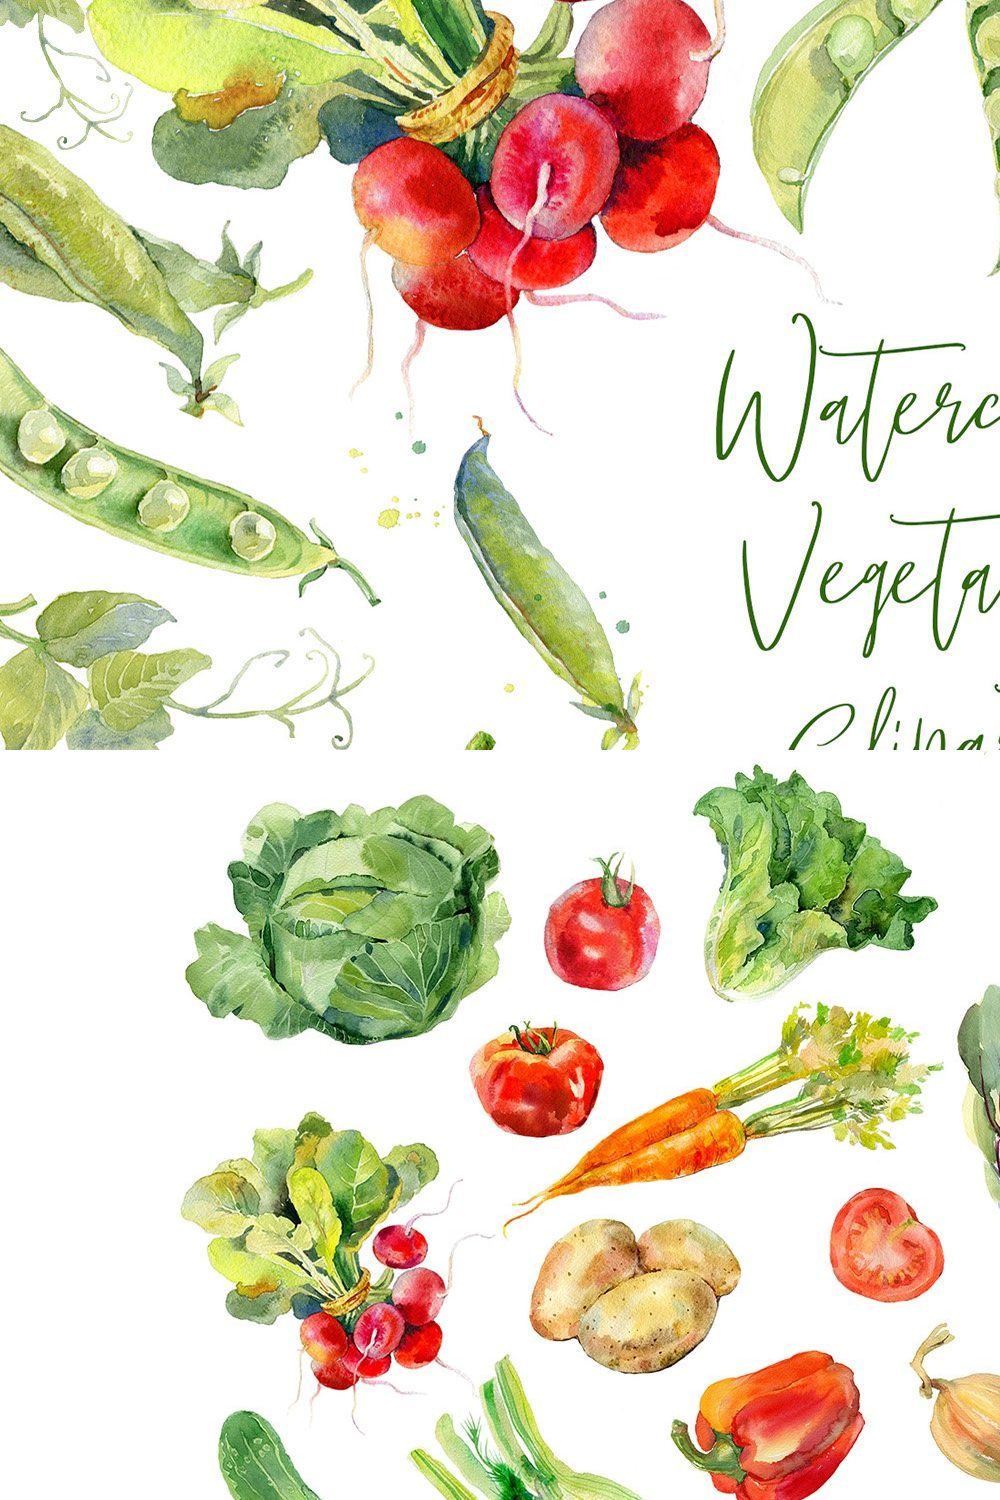 Watercolor vegetables set pinterest preview image.